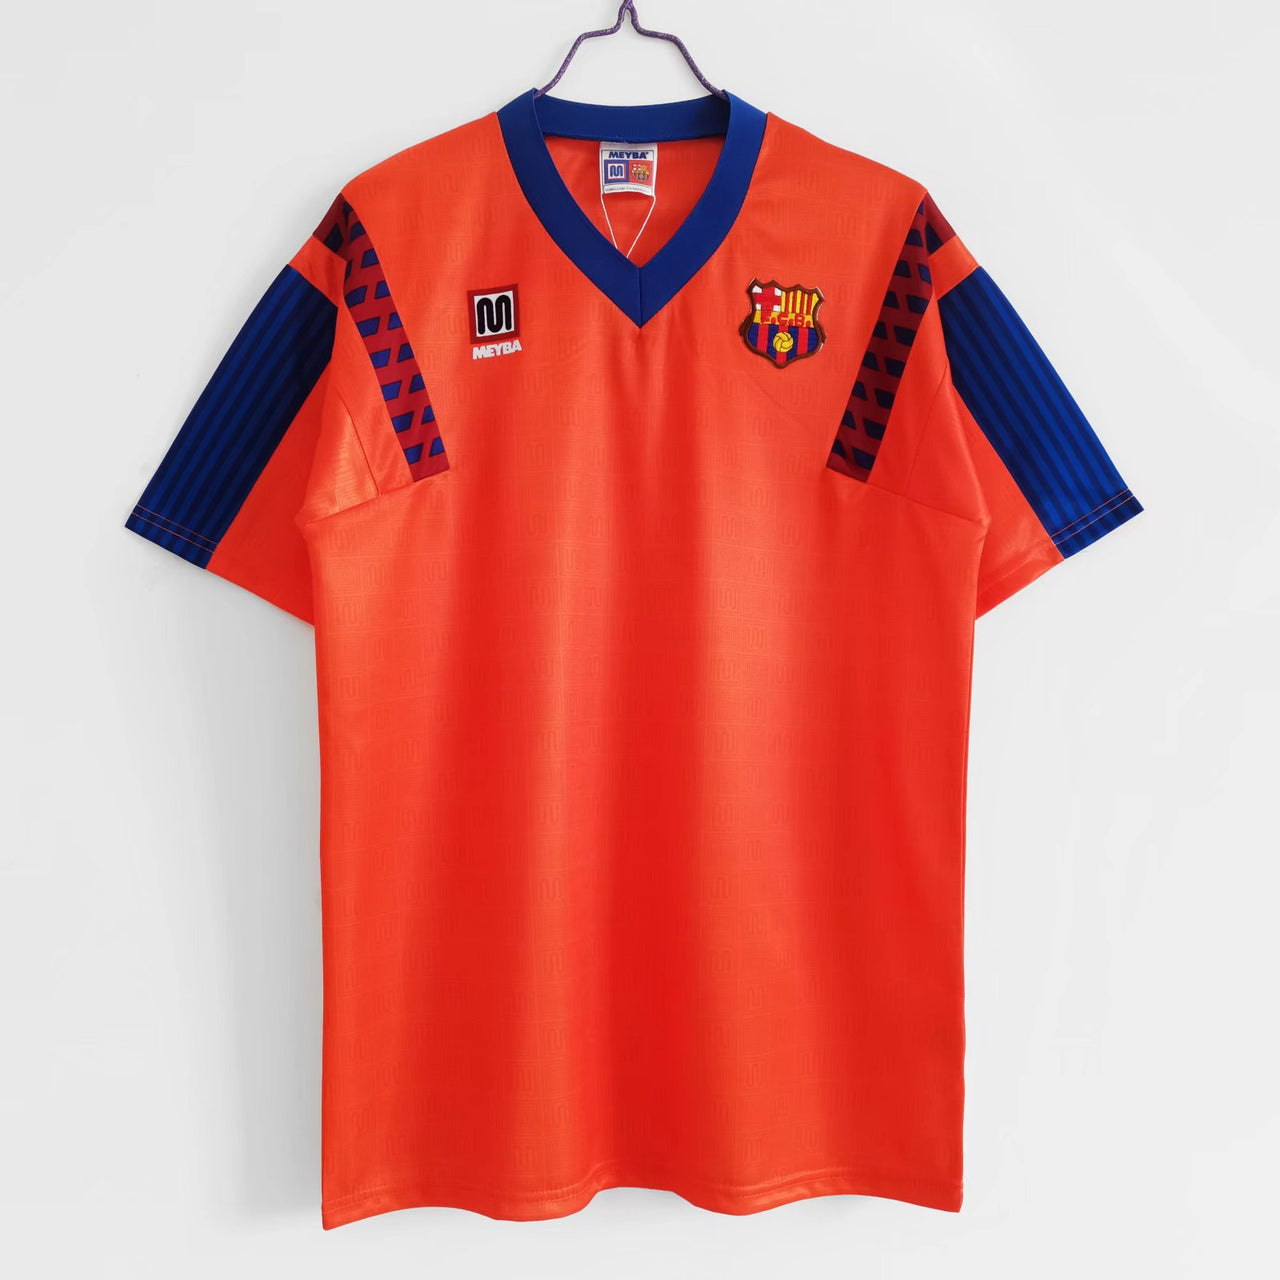 Barcelona FC 1992 Away Short slave Retro Football jersey